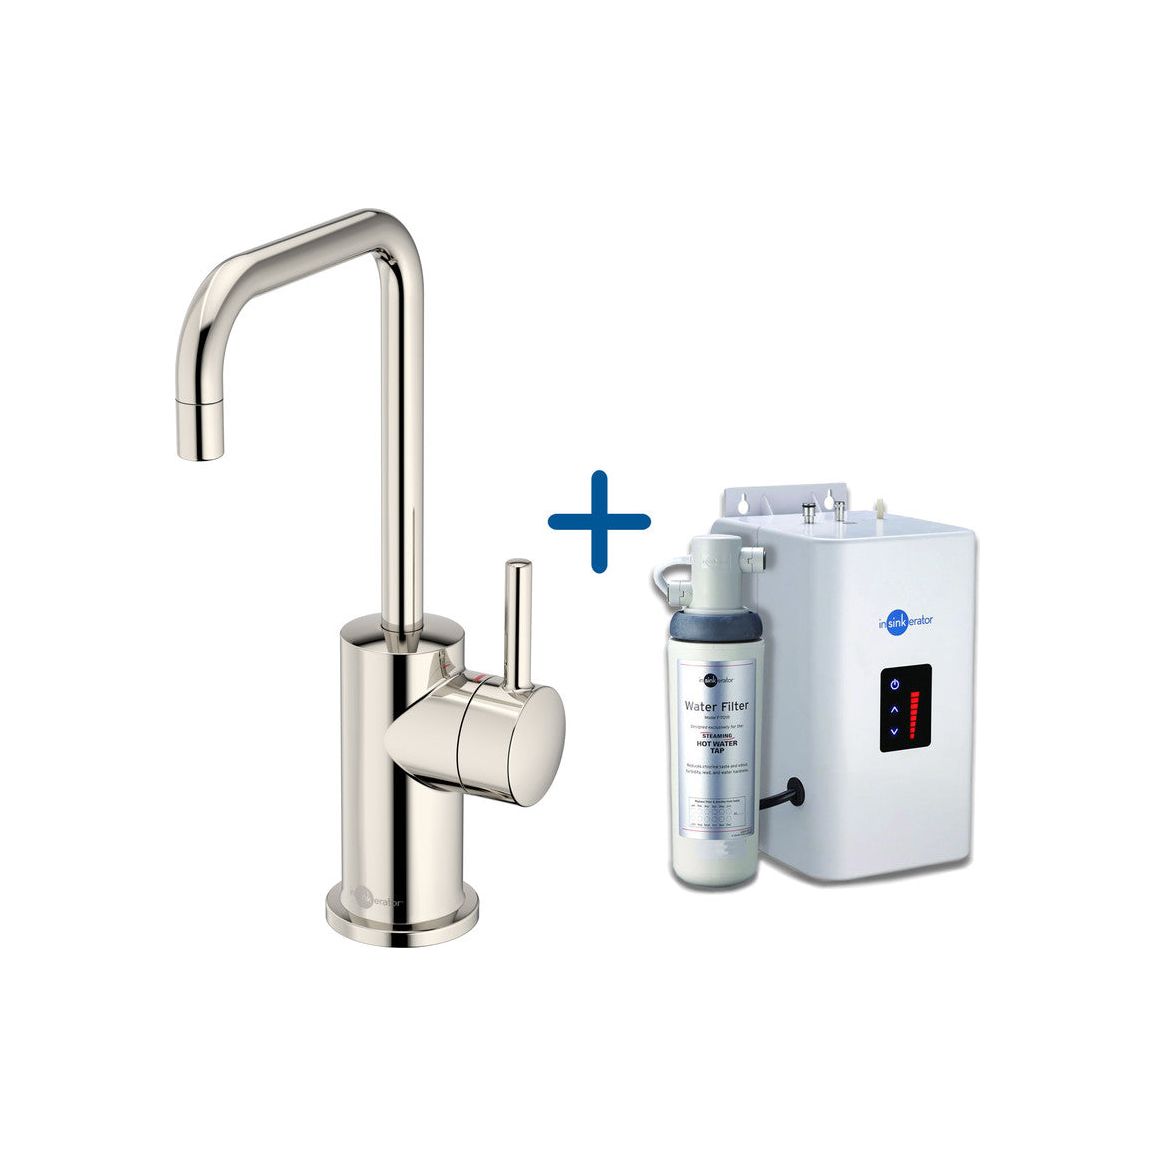 Robinet d'eau chaude et réservoir Neo InSinkErator FH3020 - Nickel poli